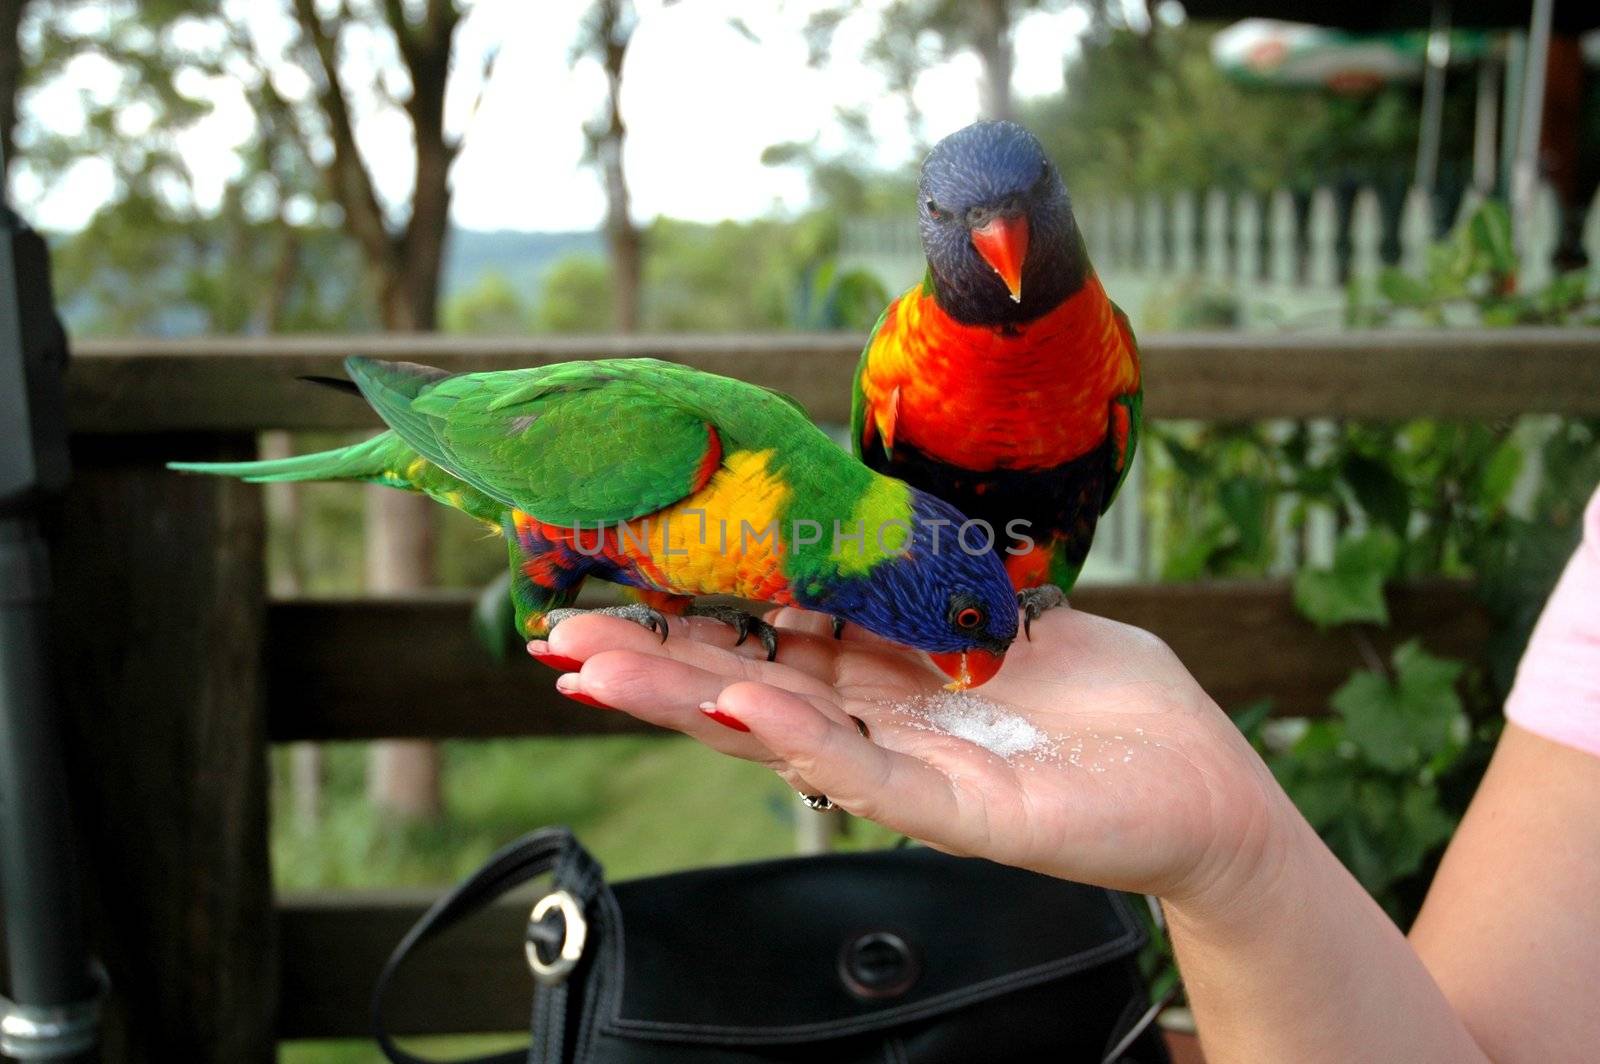 Not so wild, wild parrots. by ianmck